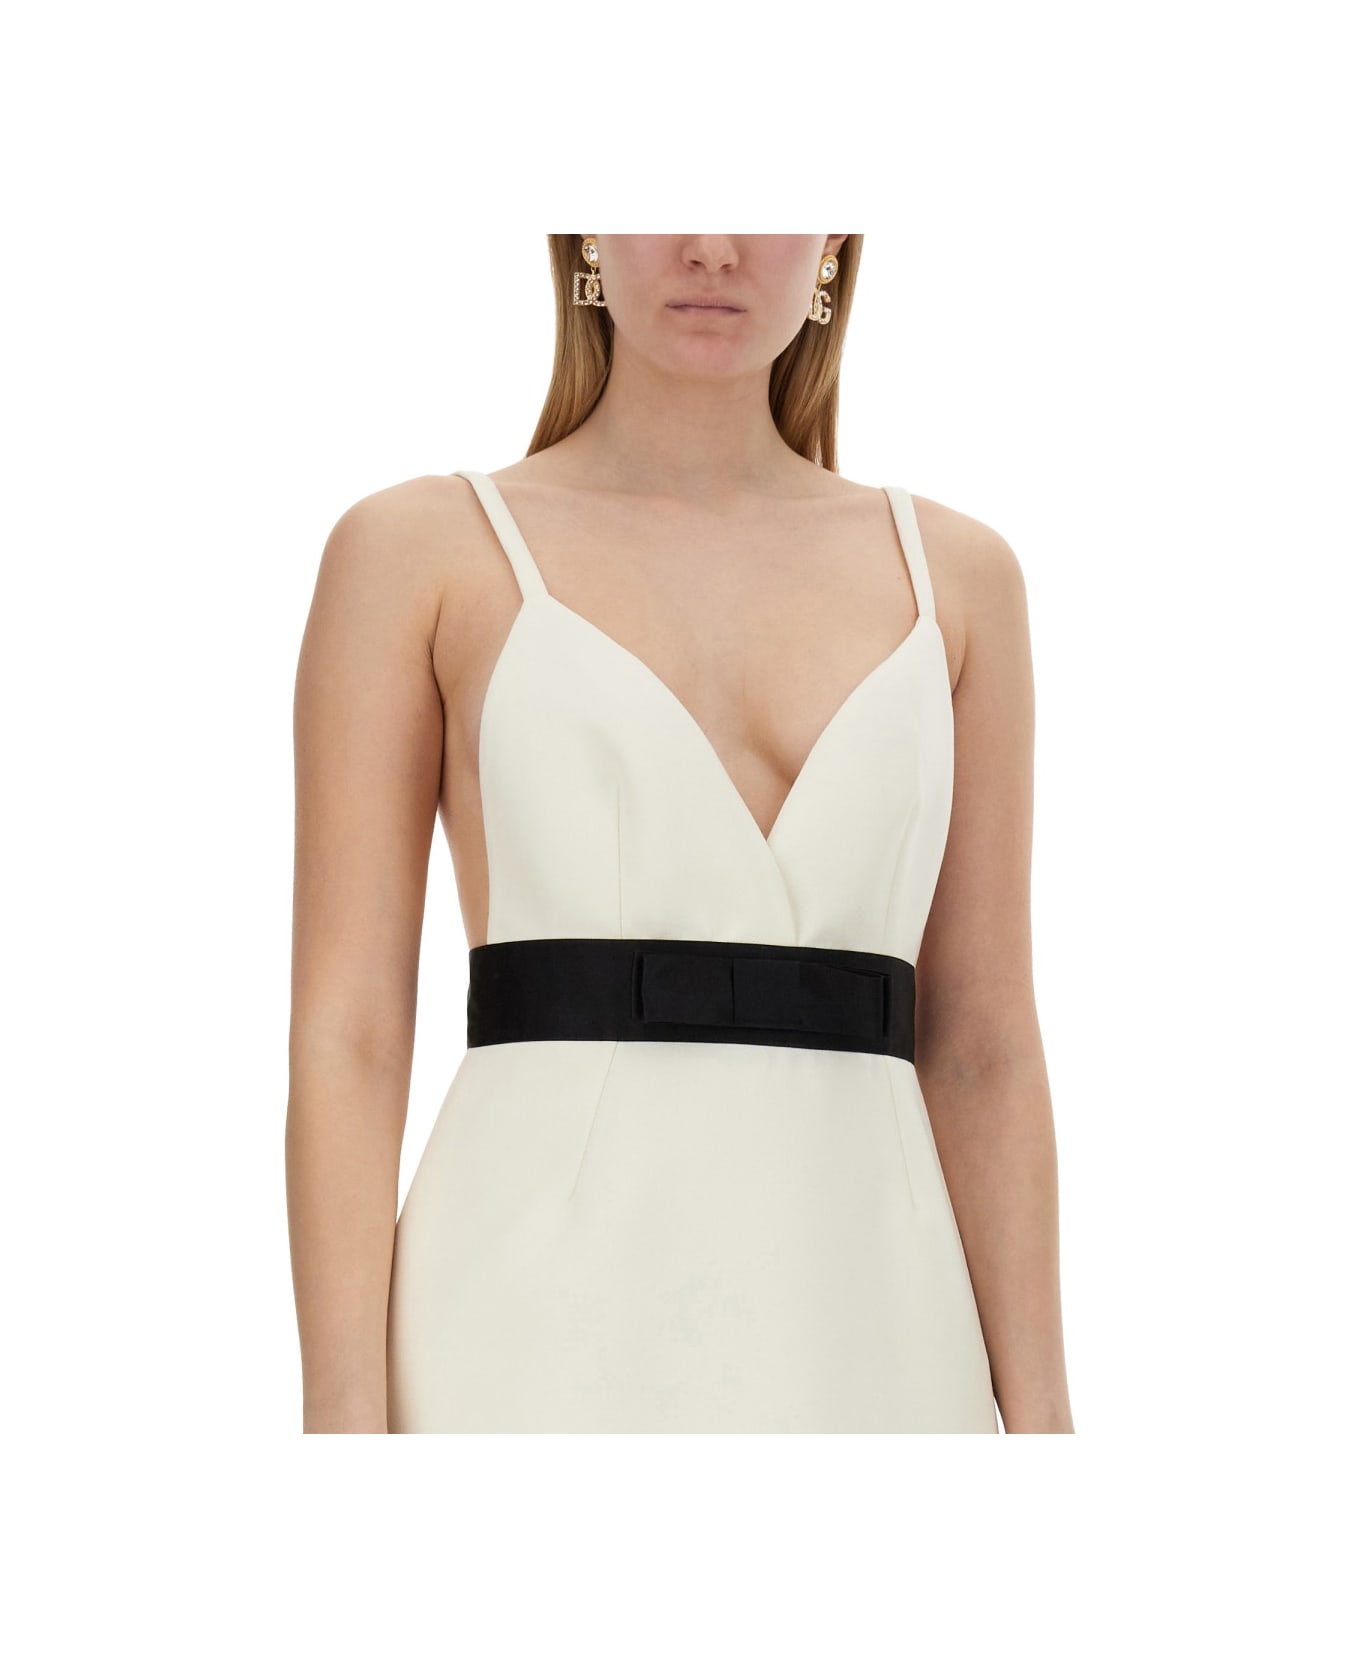 Dolce & Gabbana Short Dress With Shoulder Straps And Satin Belt - WHITE